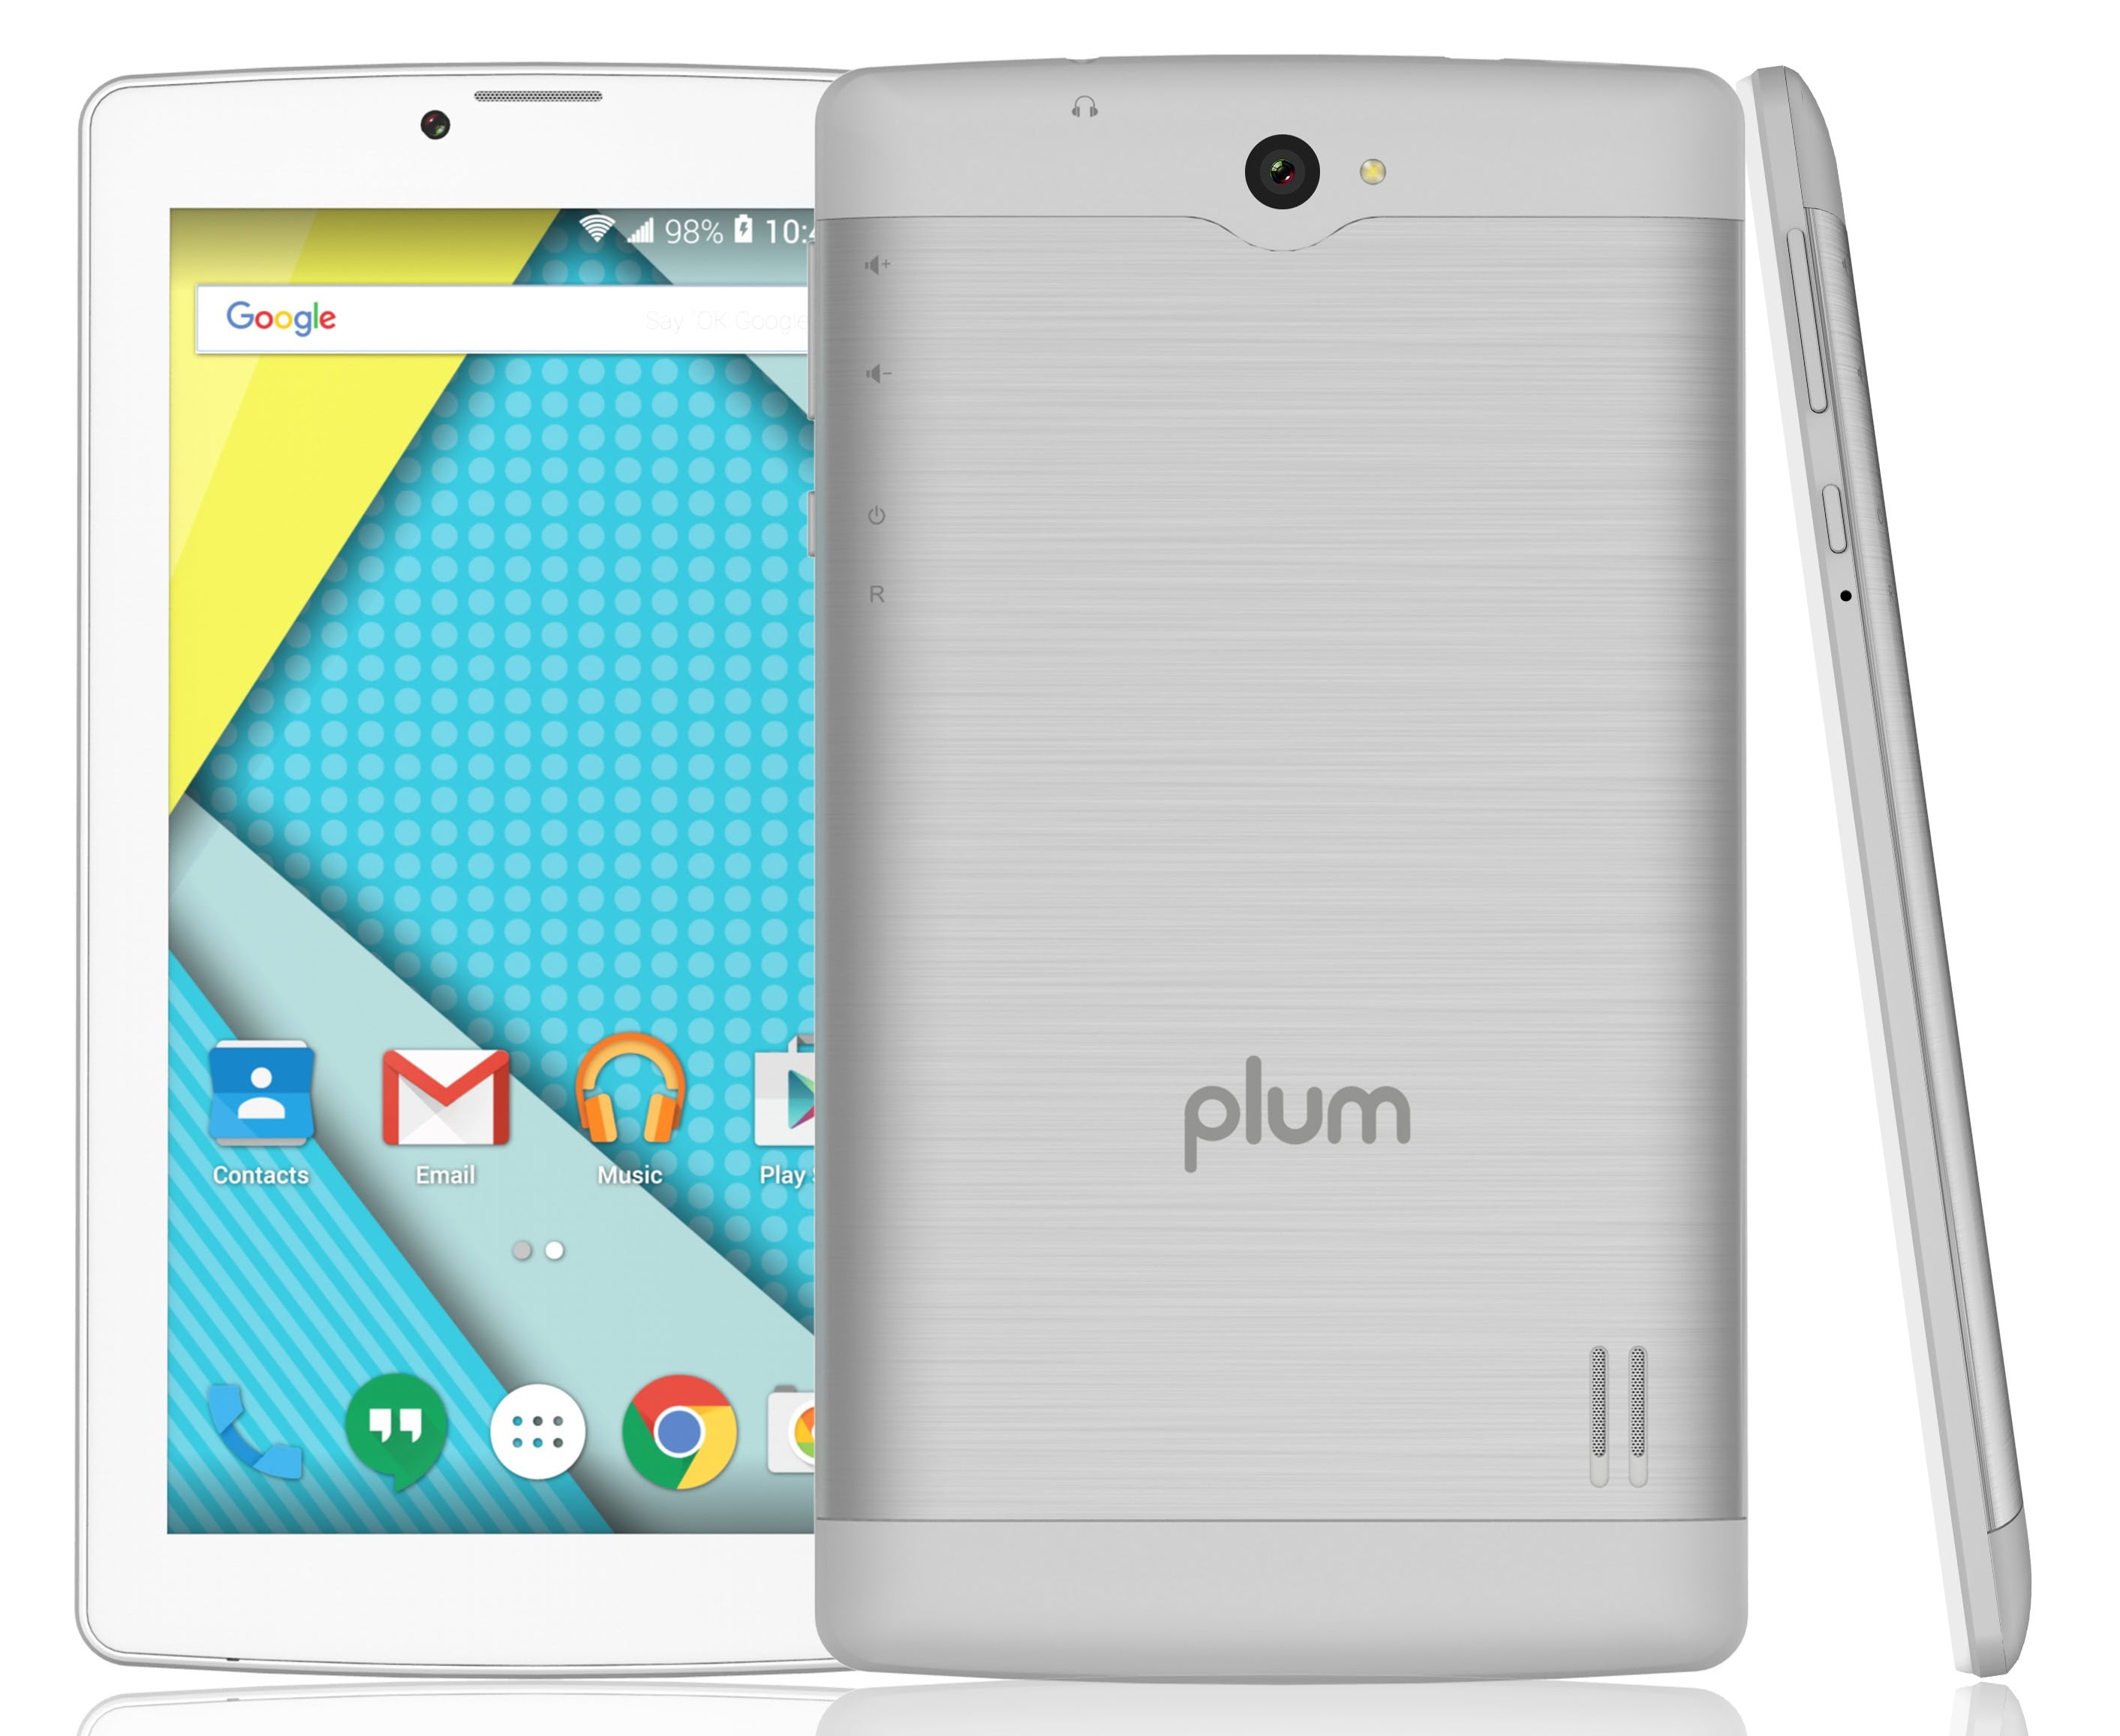 Plum Optimax 12 - Tablet + Phone Phablet 4G GSM Unlocked 7